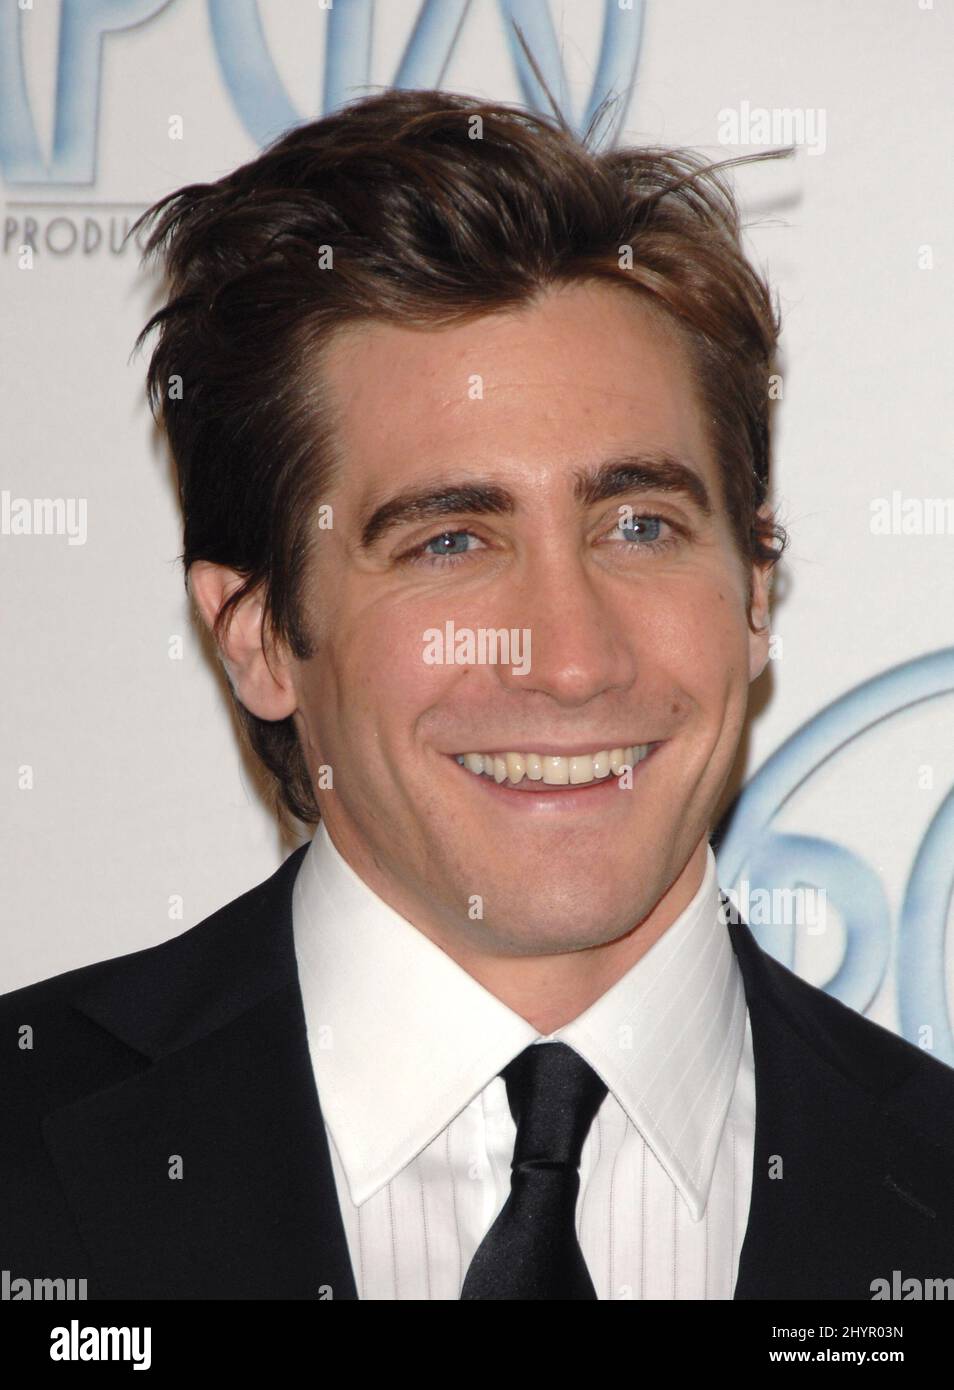 Jake Gyllenhaal nimmt an den Producers Guild Awards 2007 Teil. Bild: UK Press Stockfoto